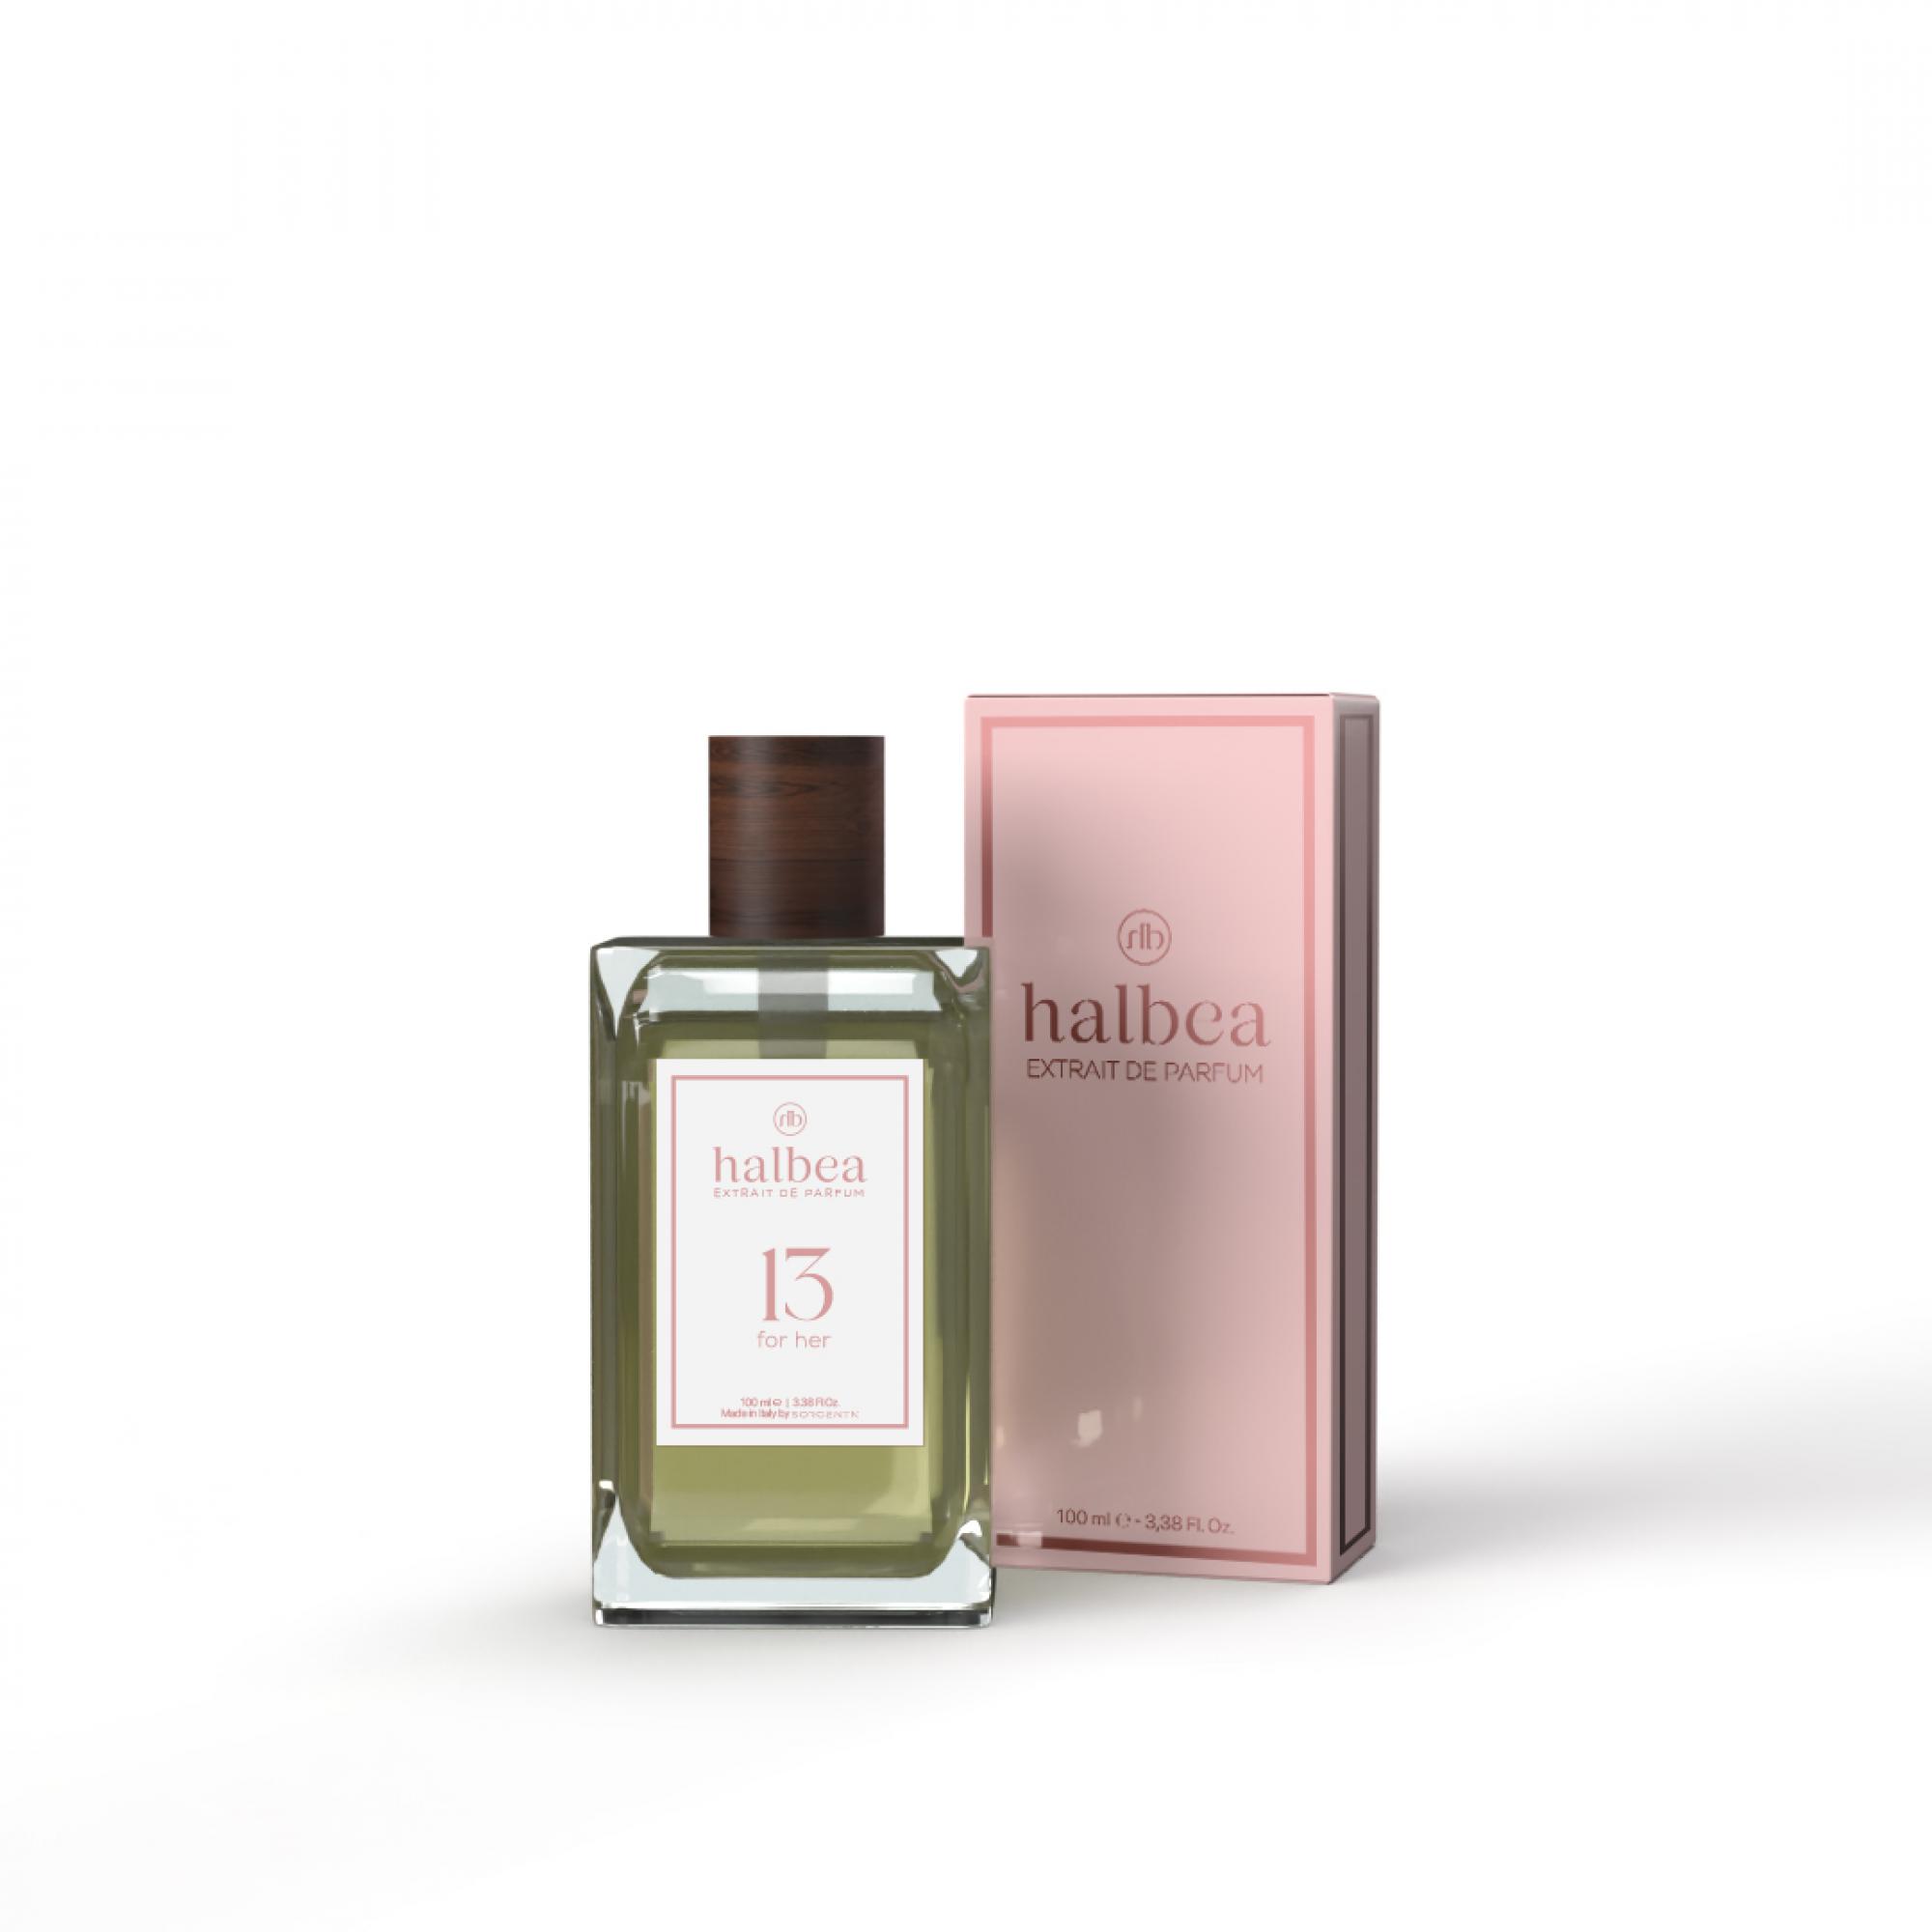 Halbea Parfum Nr. 13 insp. by Hypnotic Poison Dior 100ml